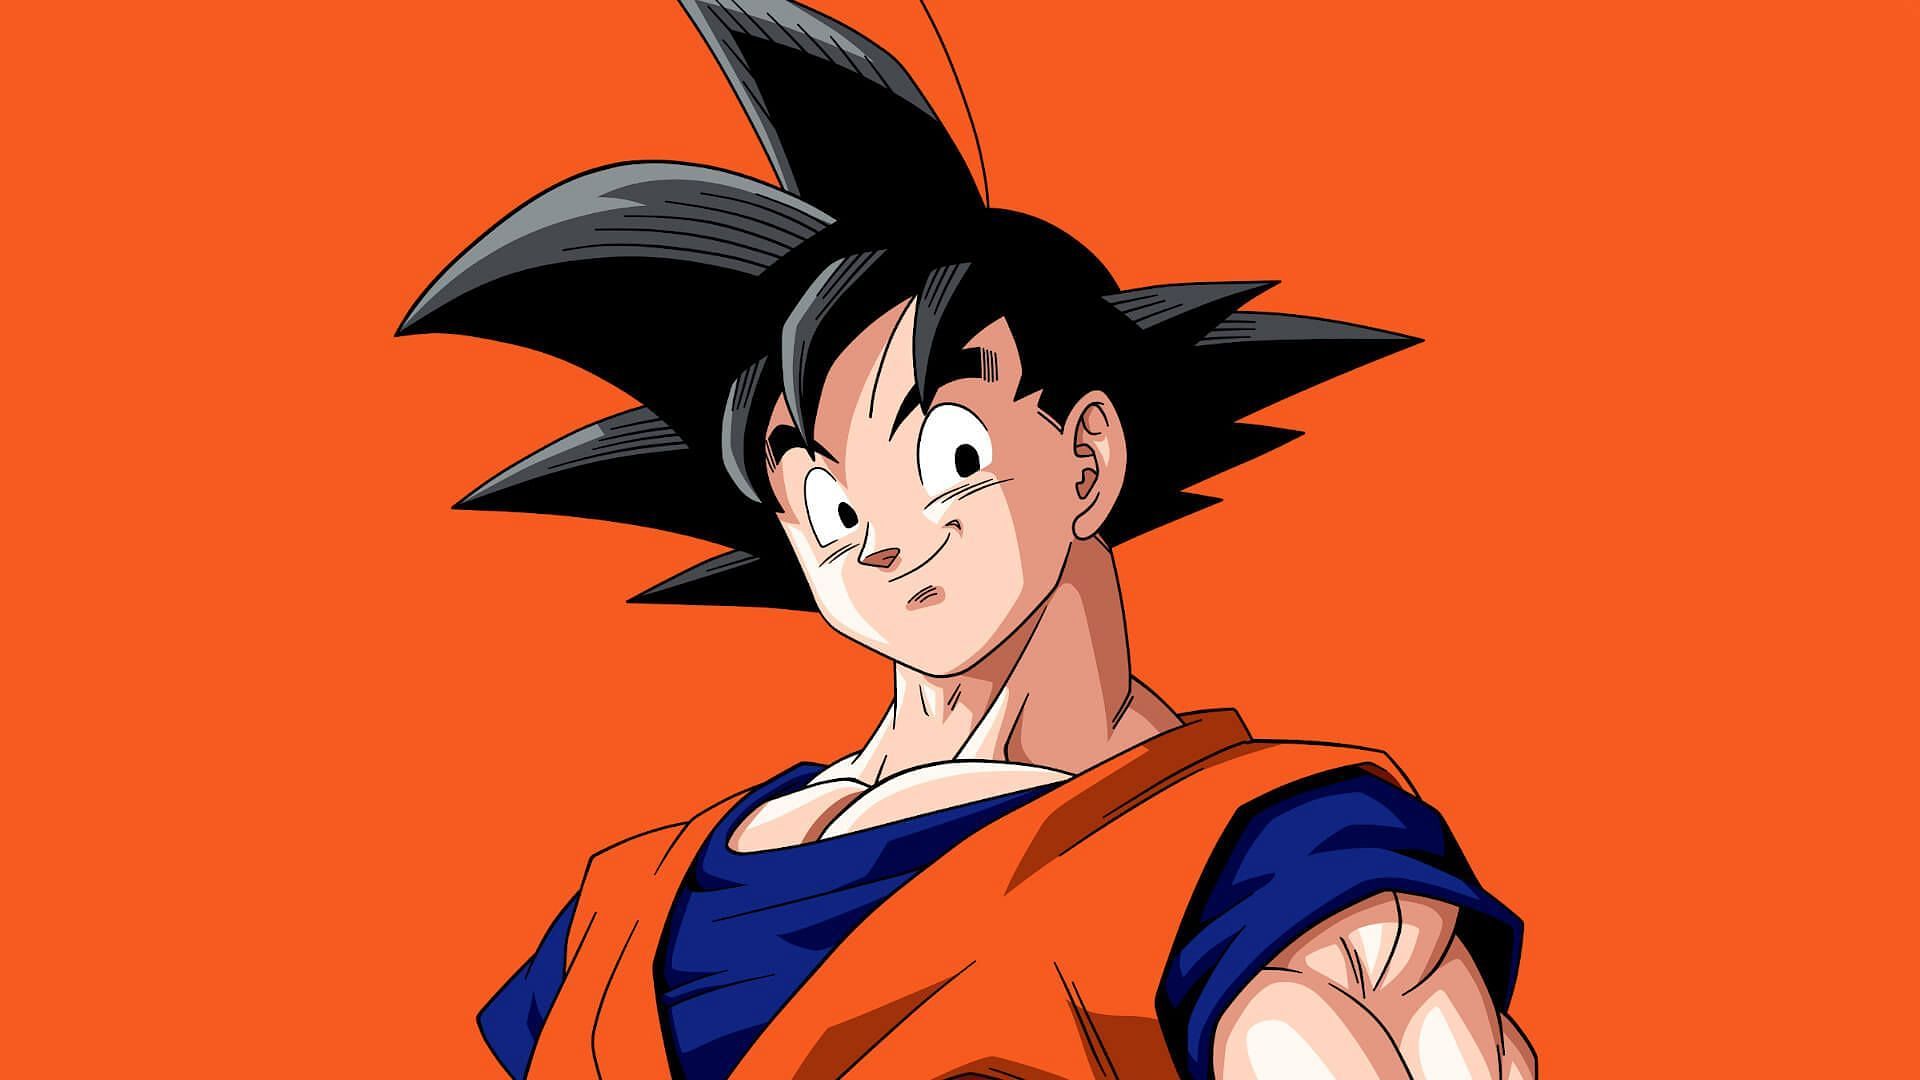 Goku from Dragon Ball. (Image via Toei Animation)